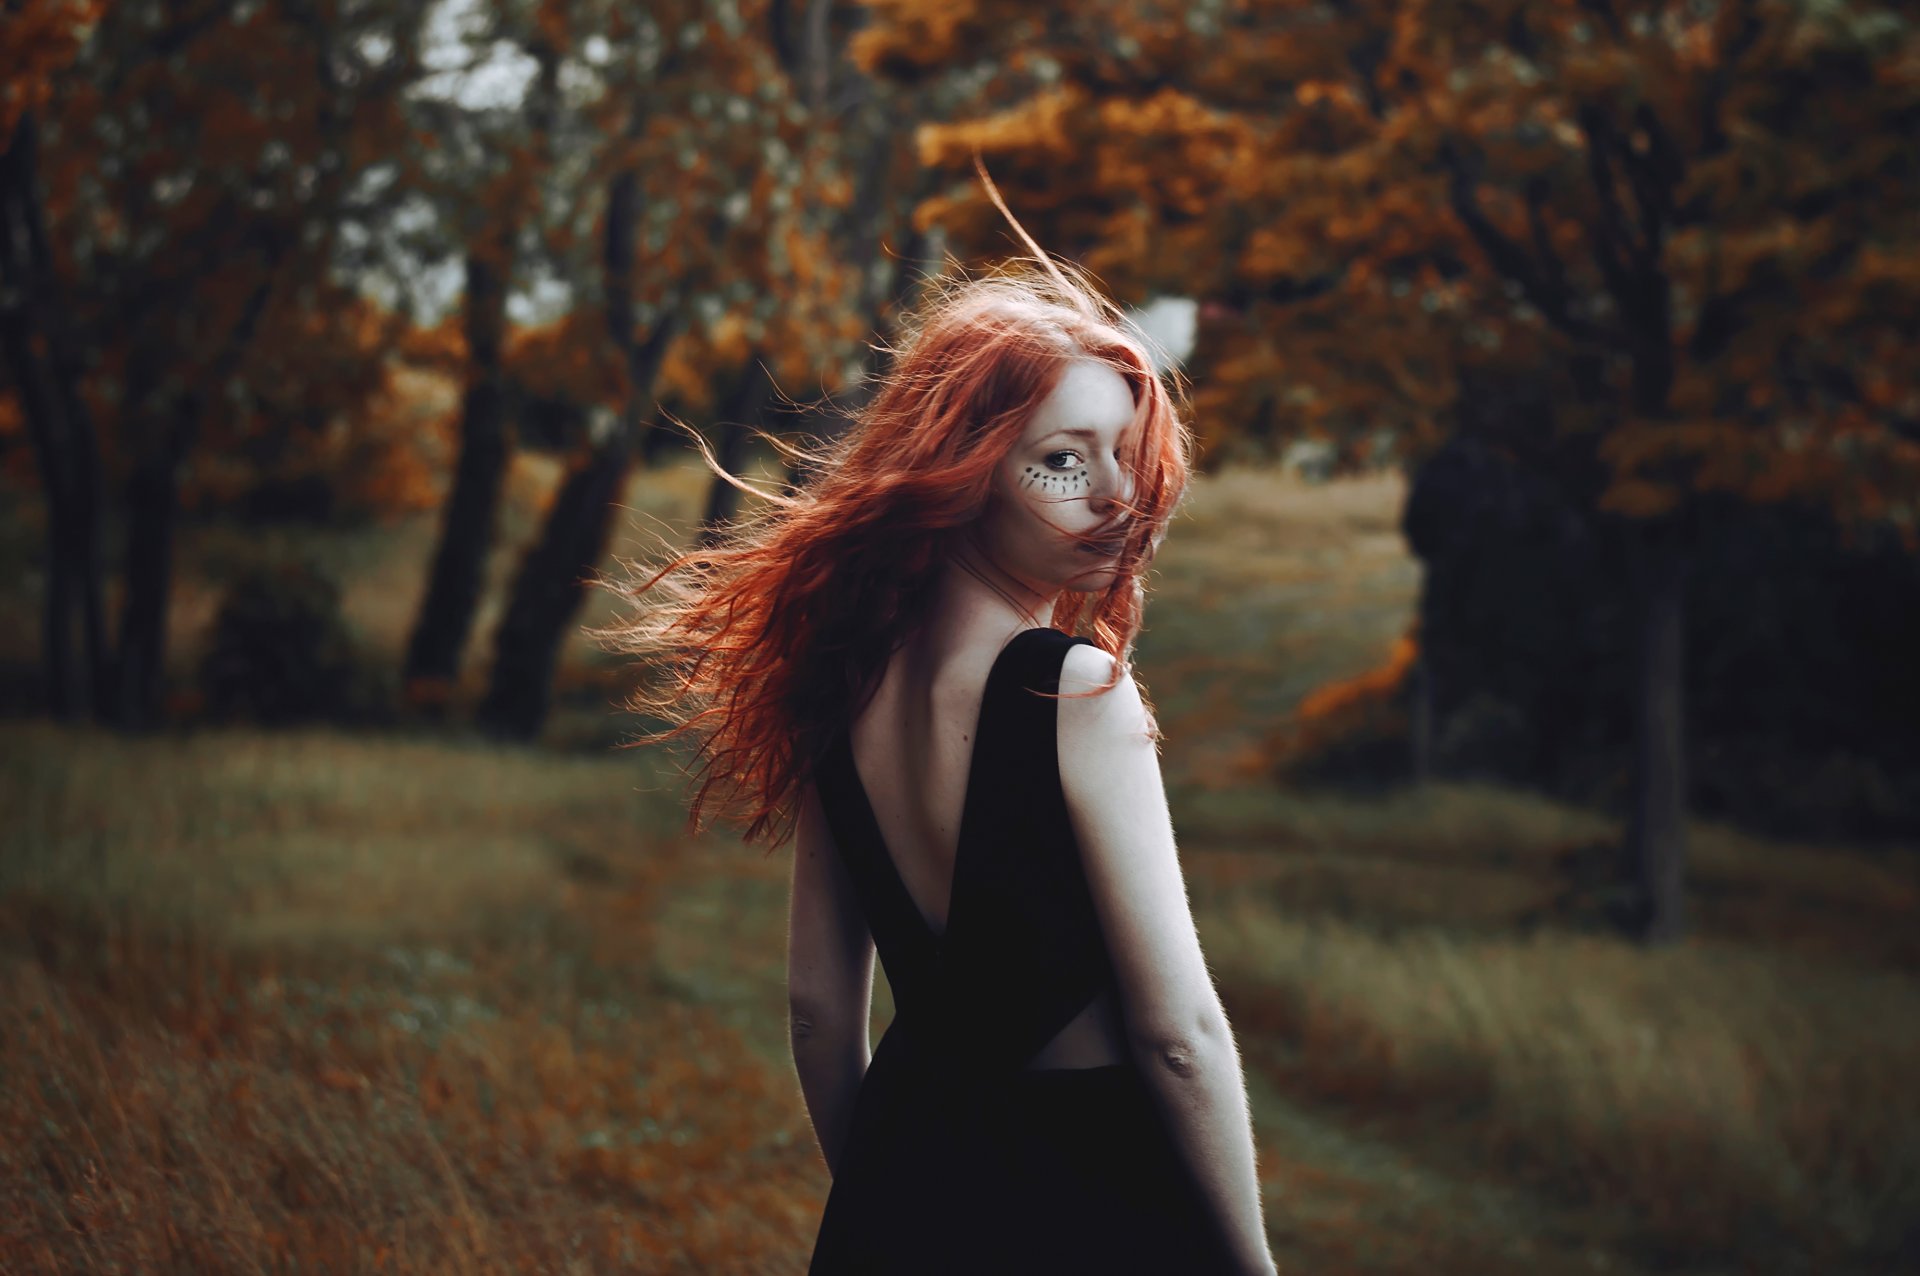 В осеннем лесу голая рыжая дева